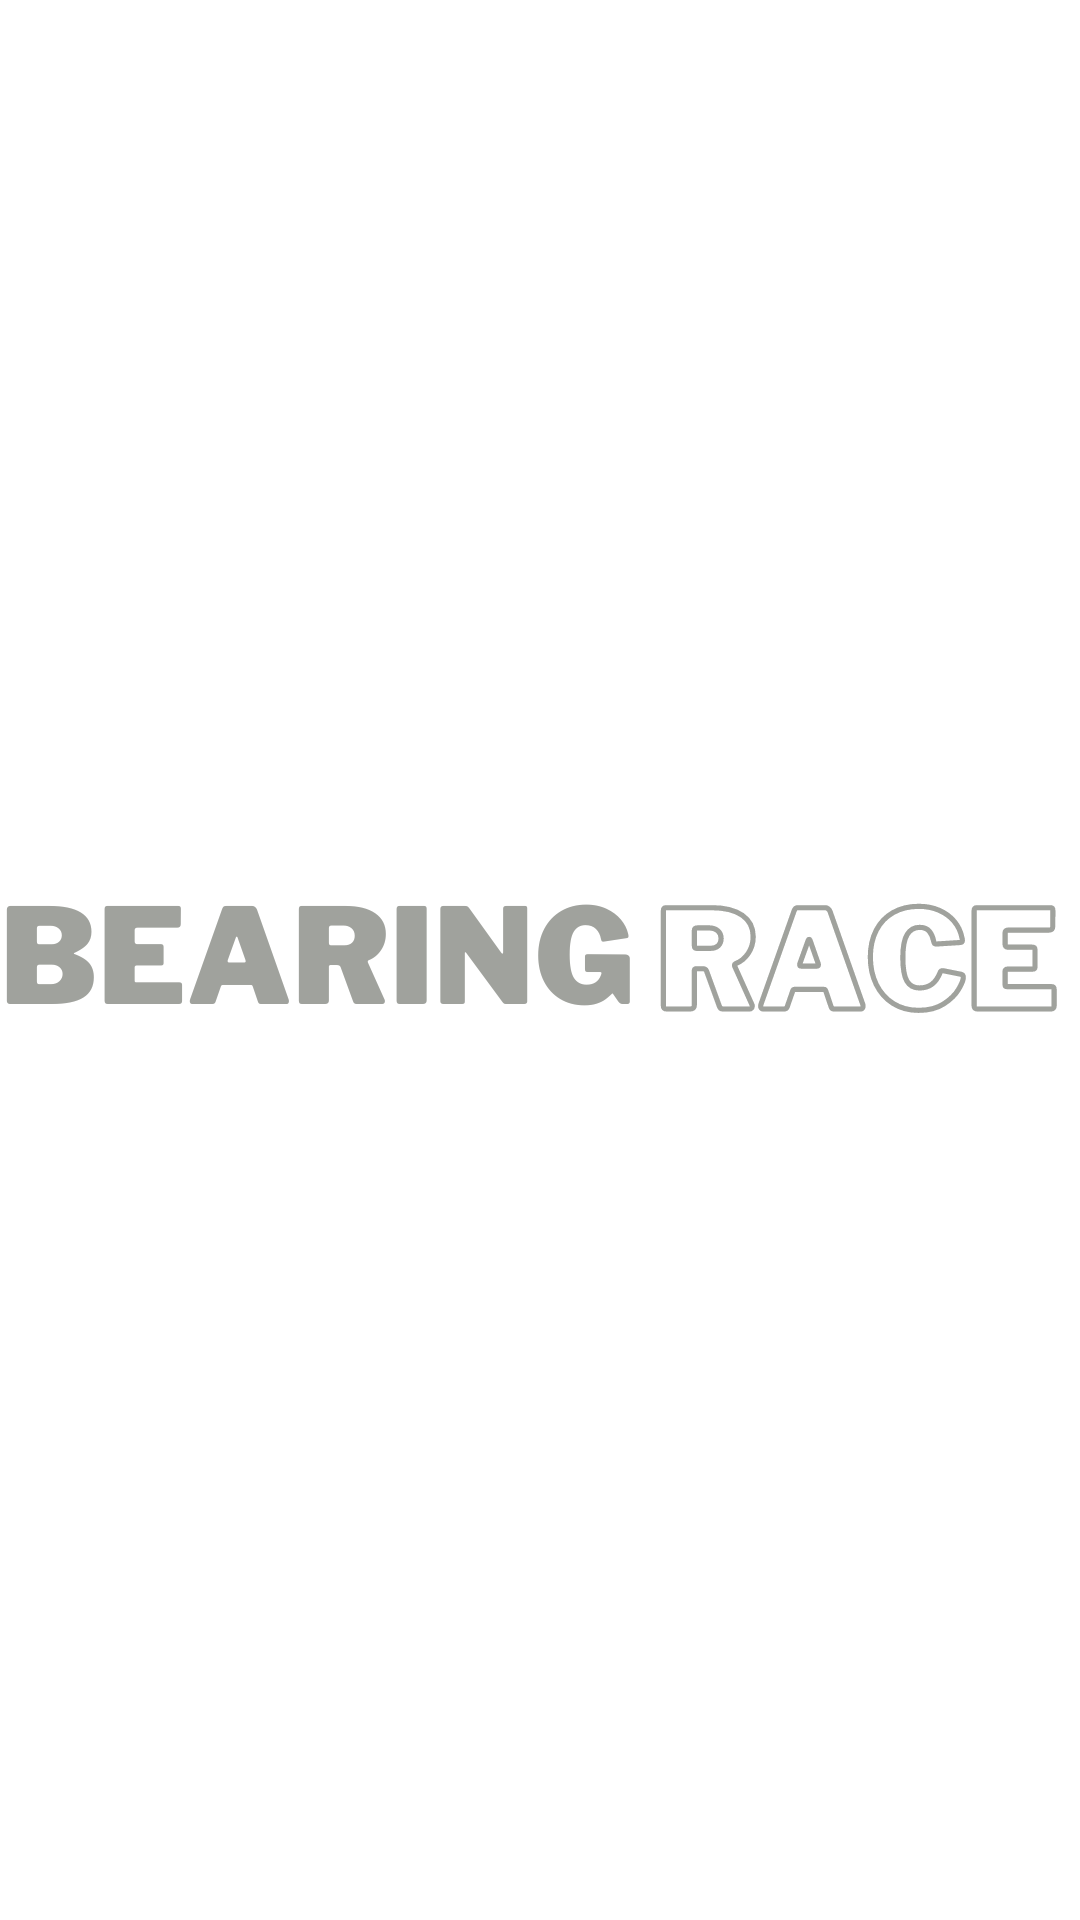 Bearing Race Title